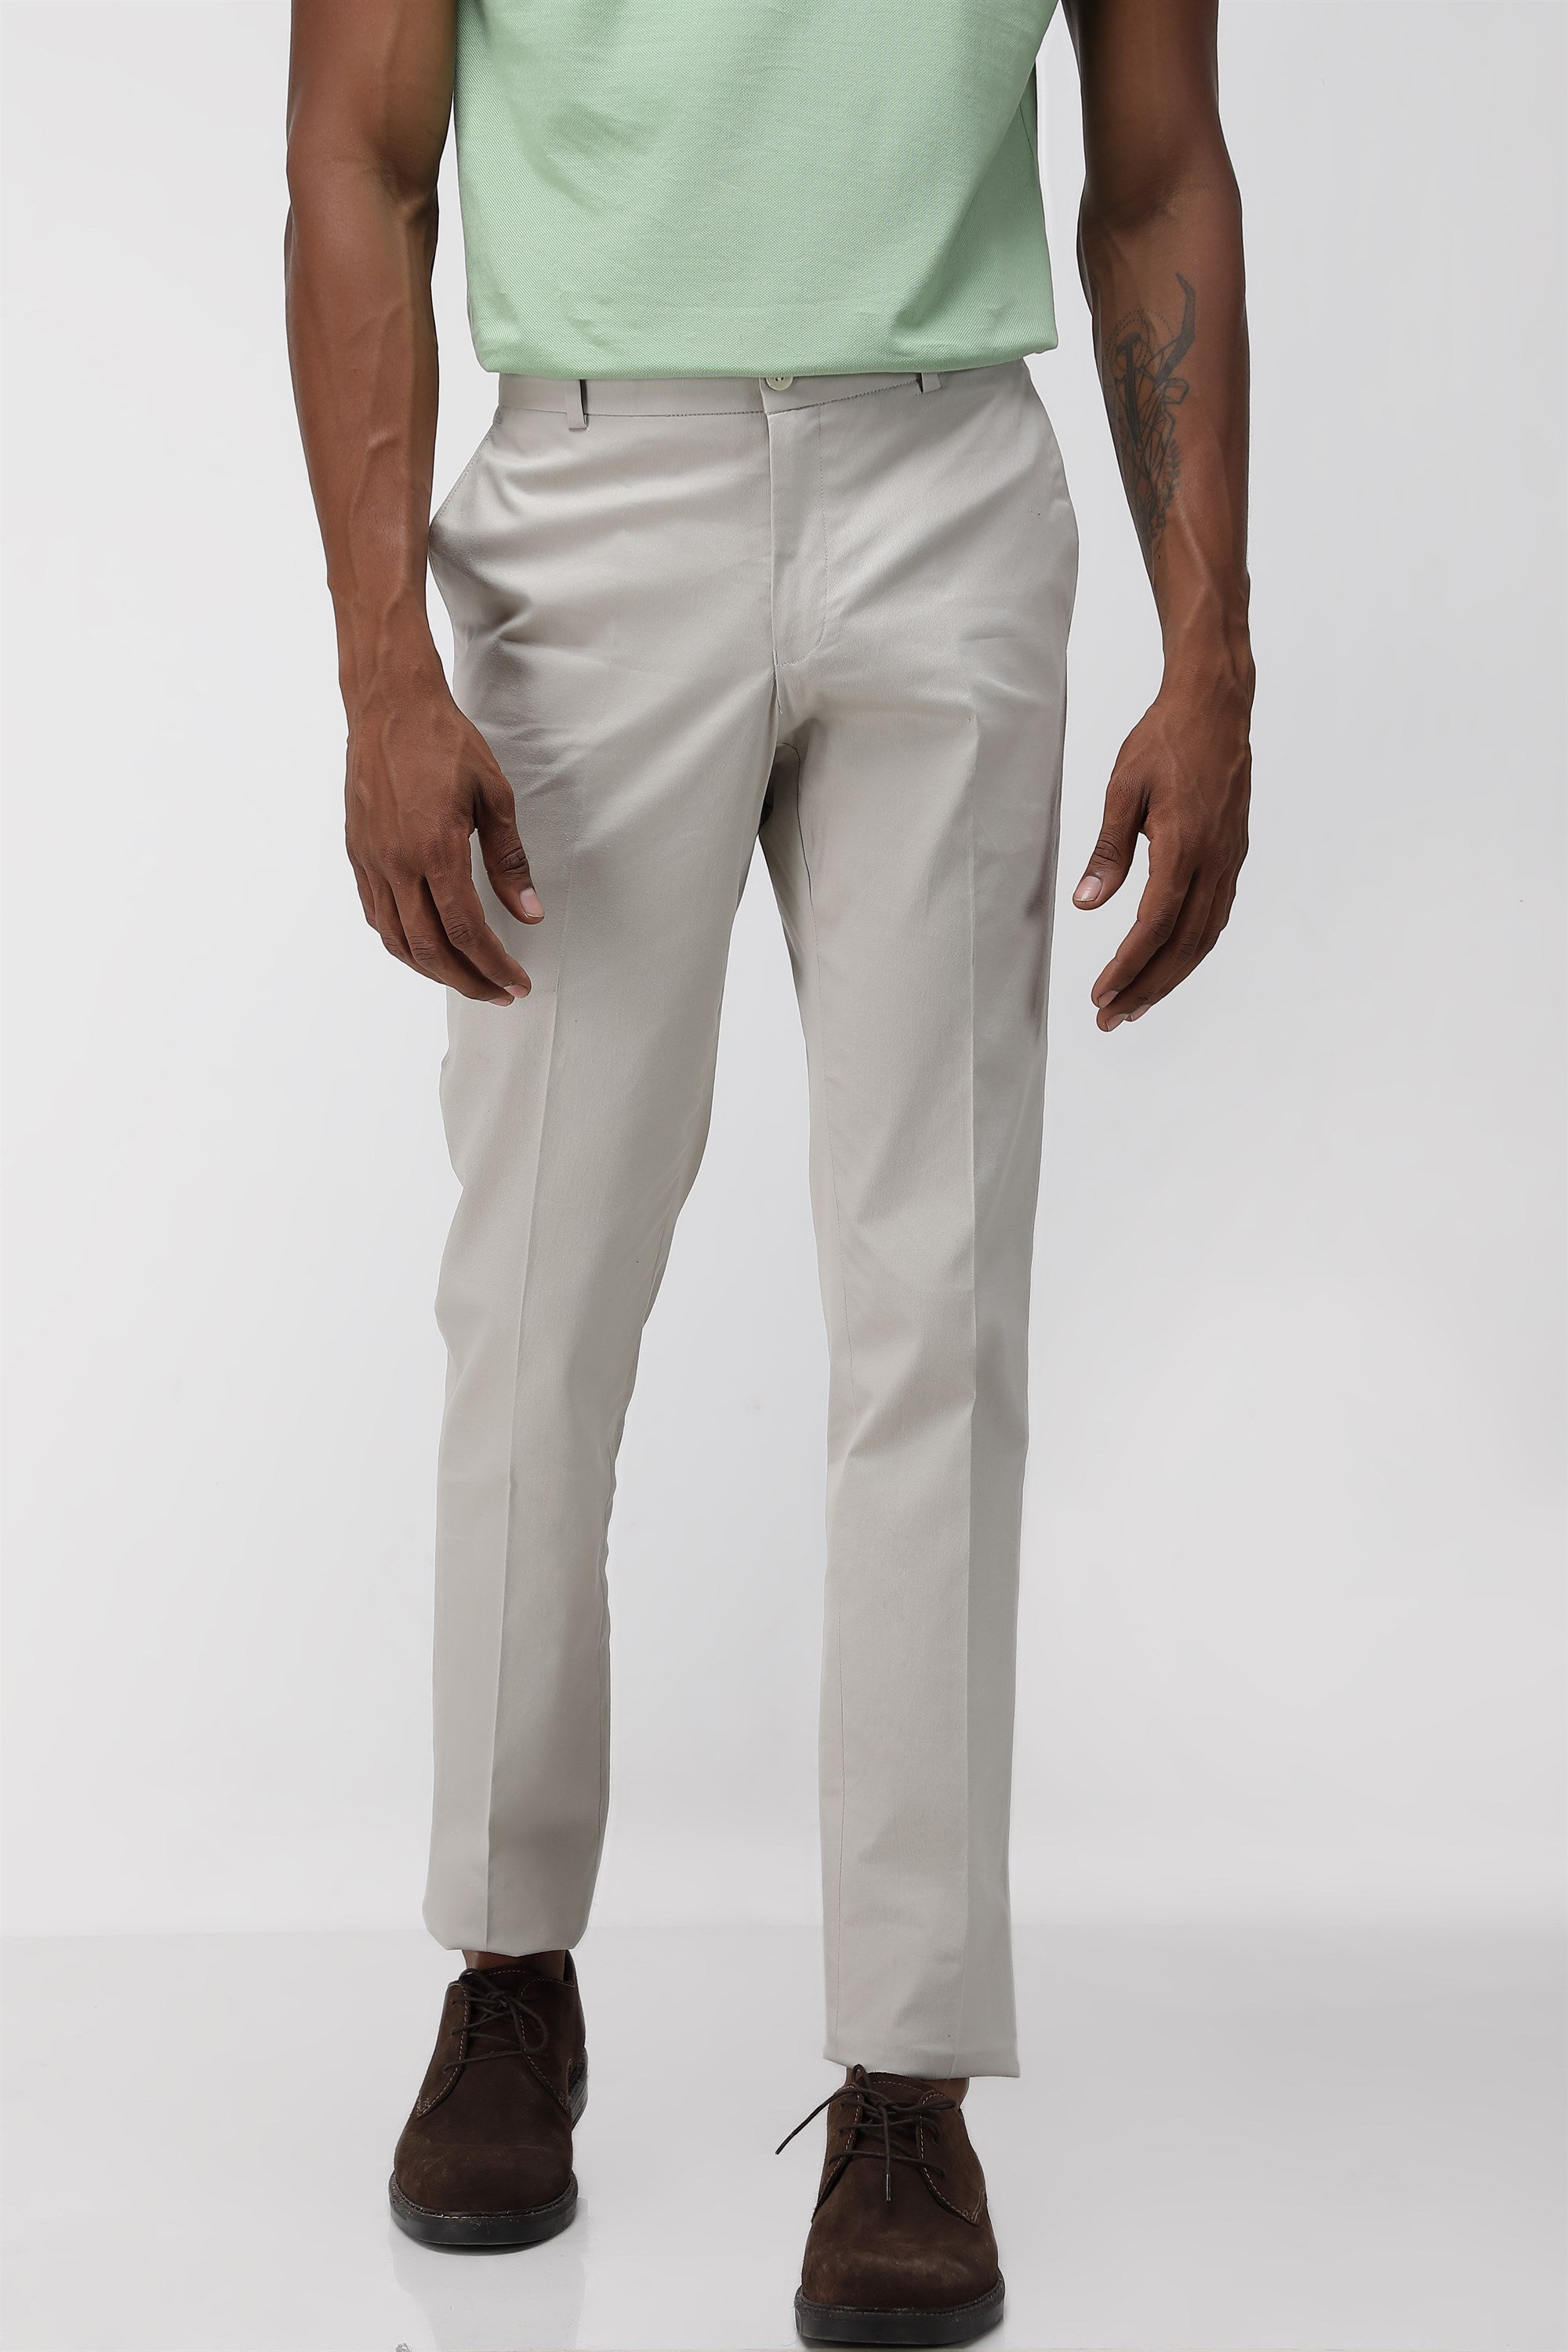 Grey Cotton Trousers For Men  Rajmohar